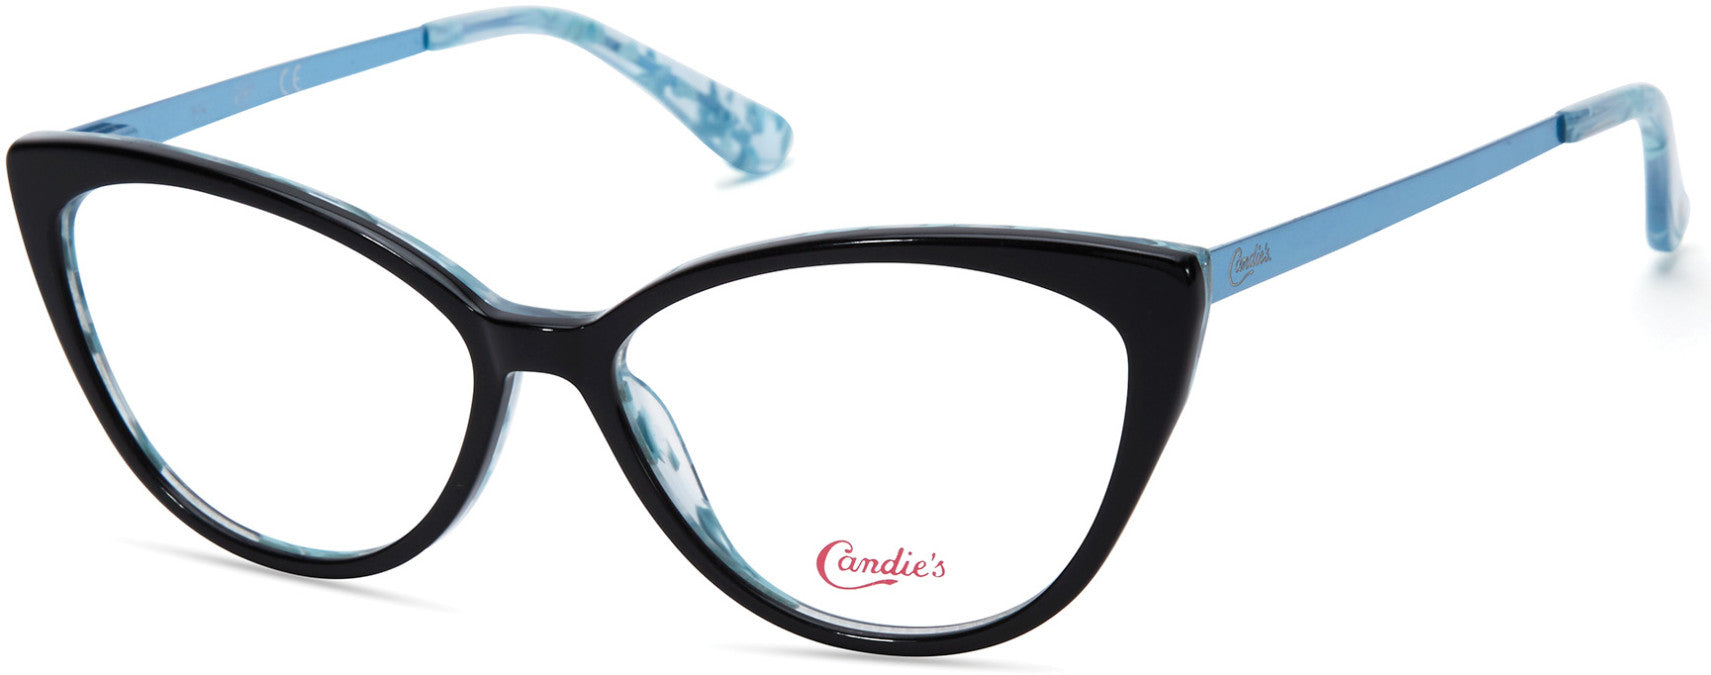 Candies CA0169 Cat Eyeglasses 001-001 - Shiny Black